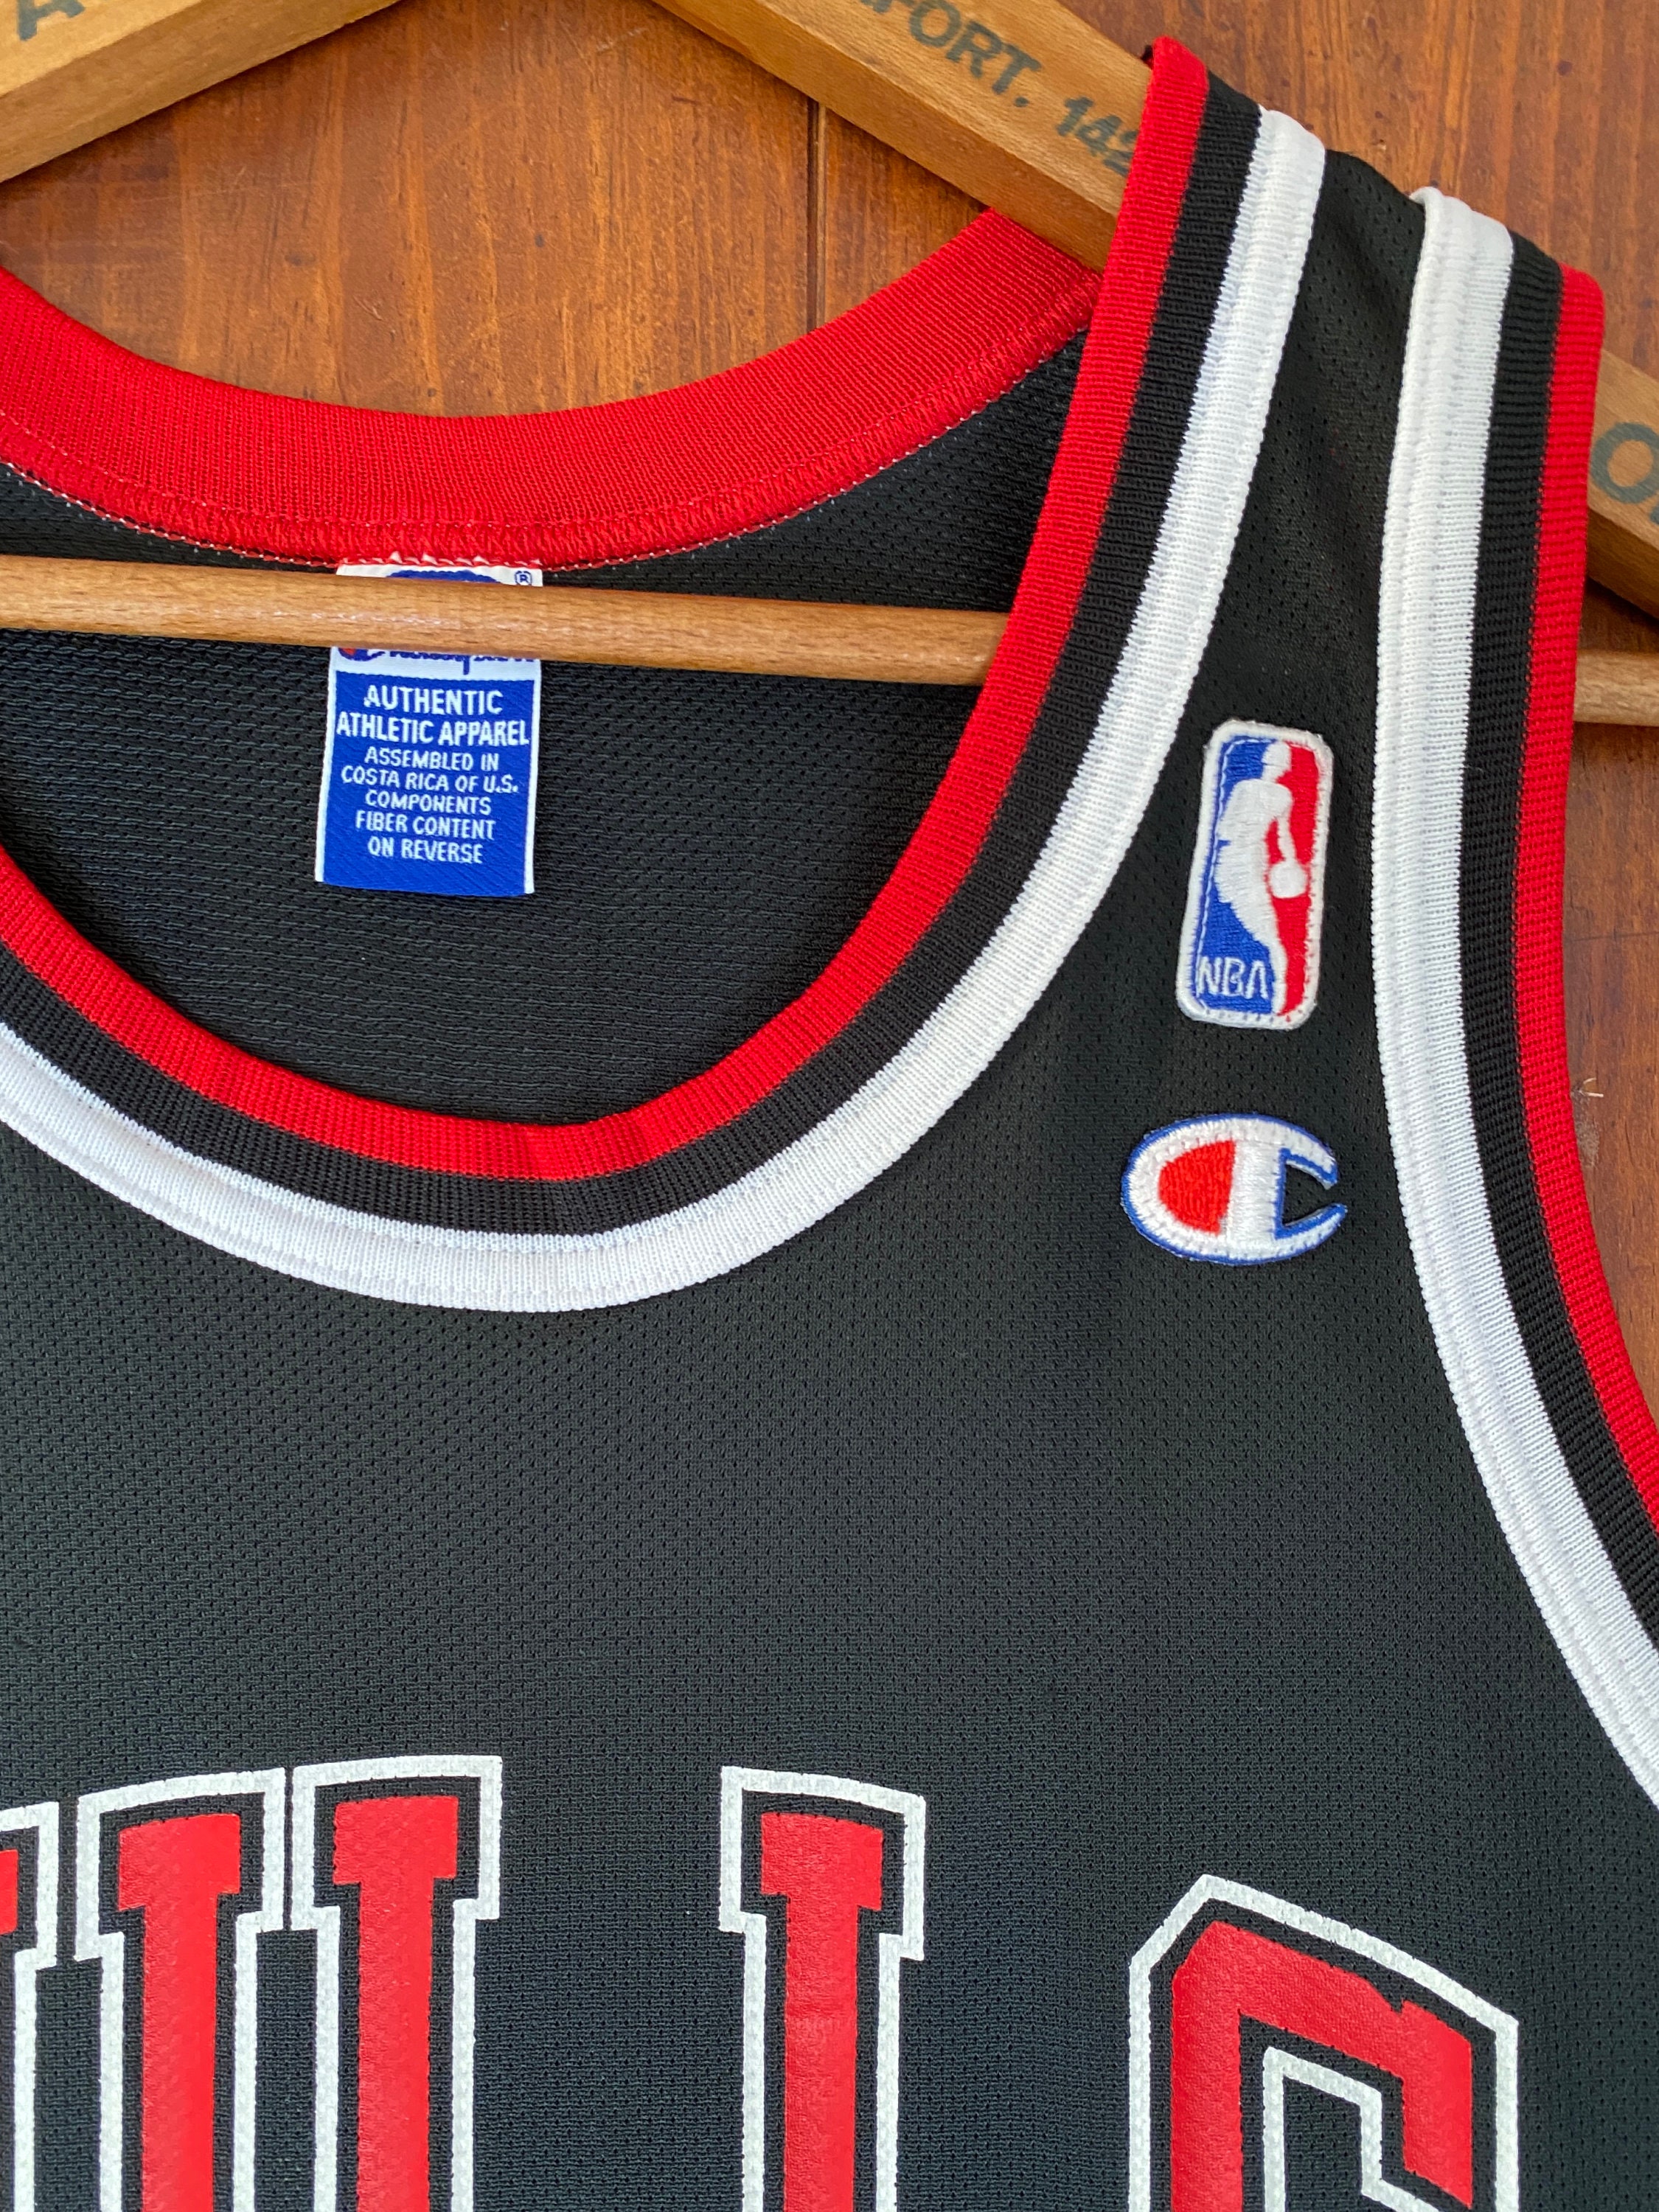 Dennis Rodman Chicago Bulls Autographed Champion #91 Authentic Jersey -  Size 46+3